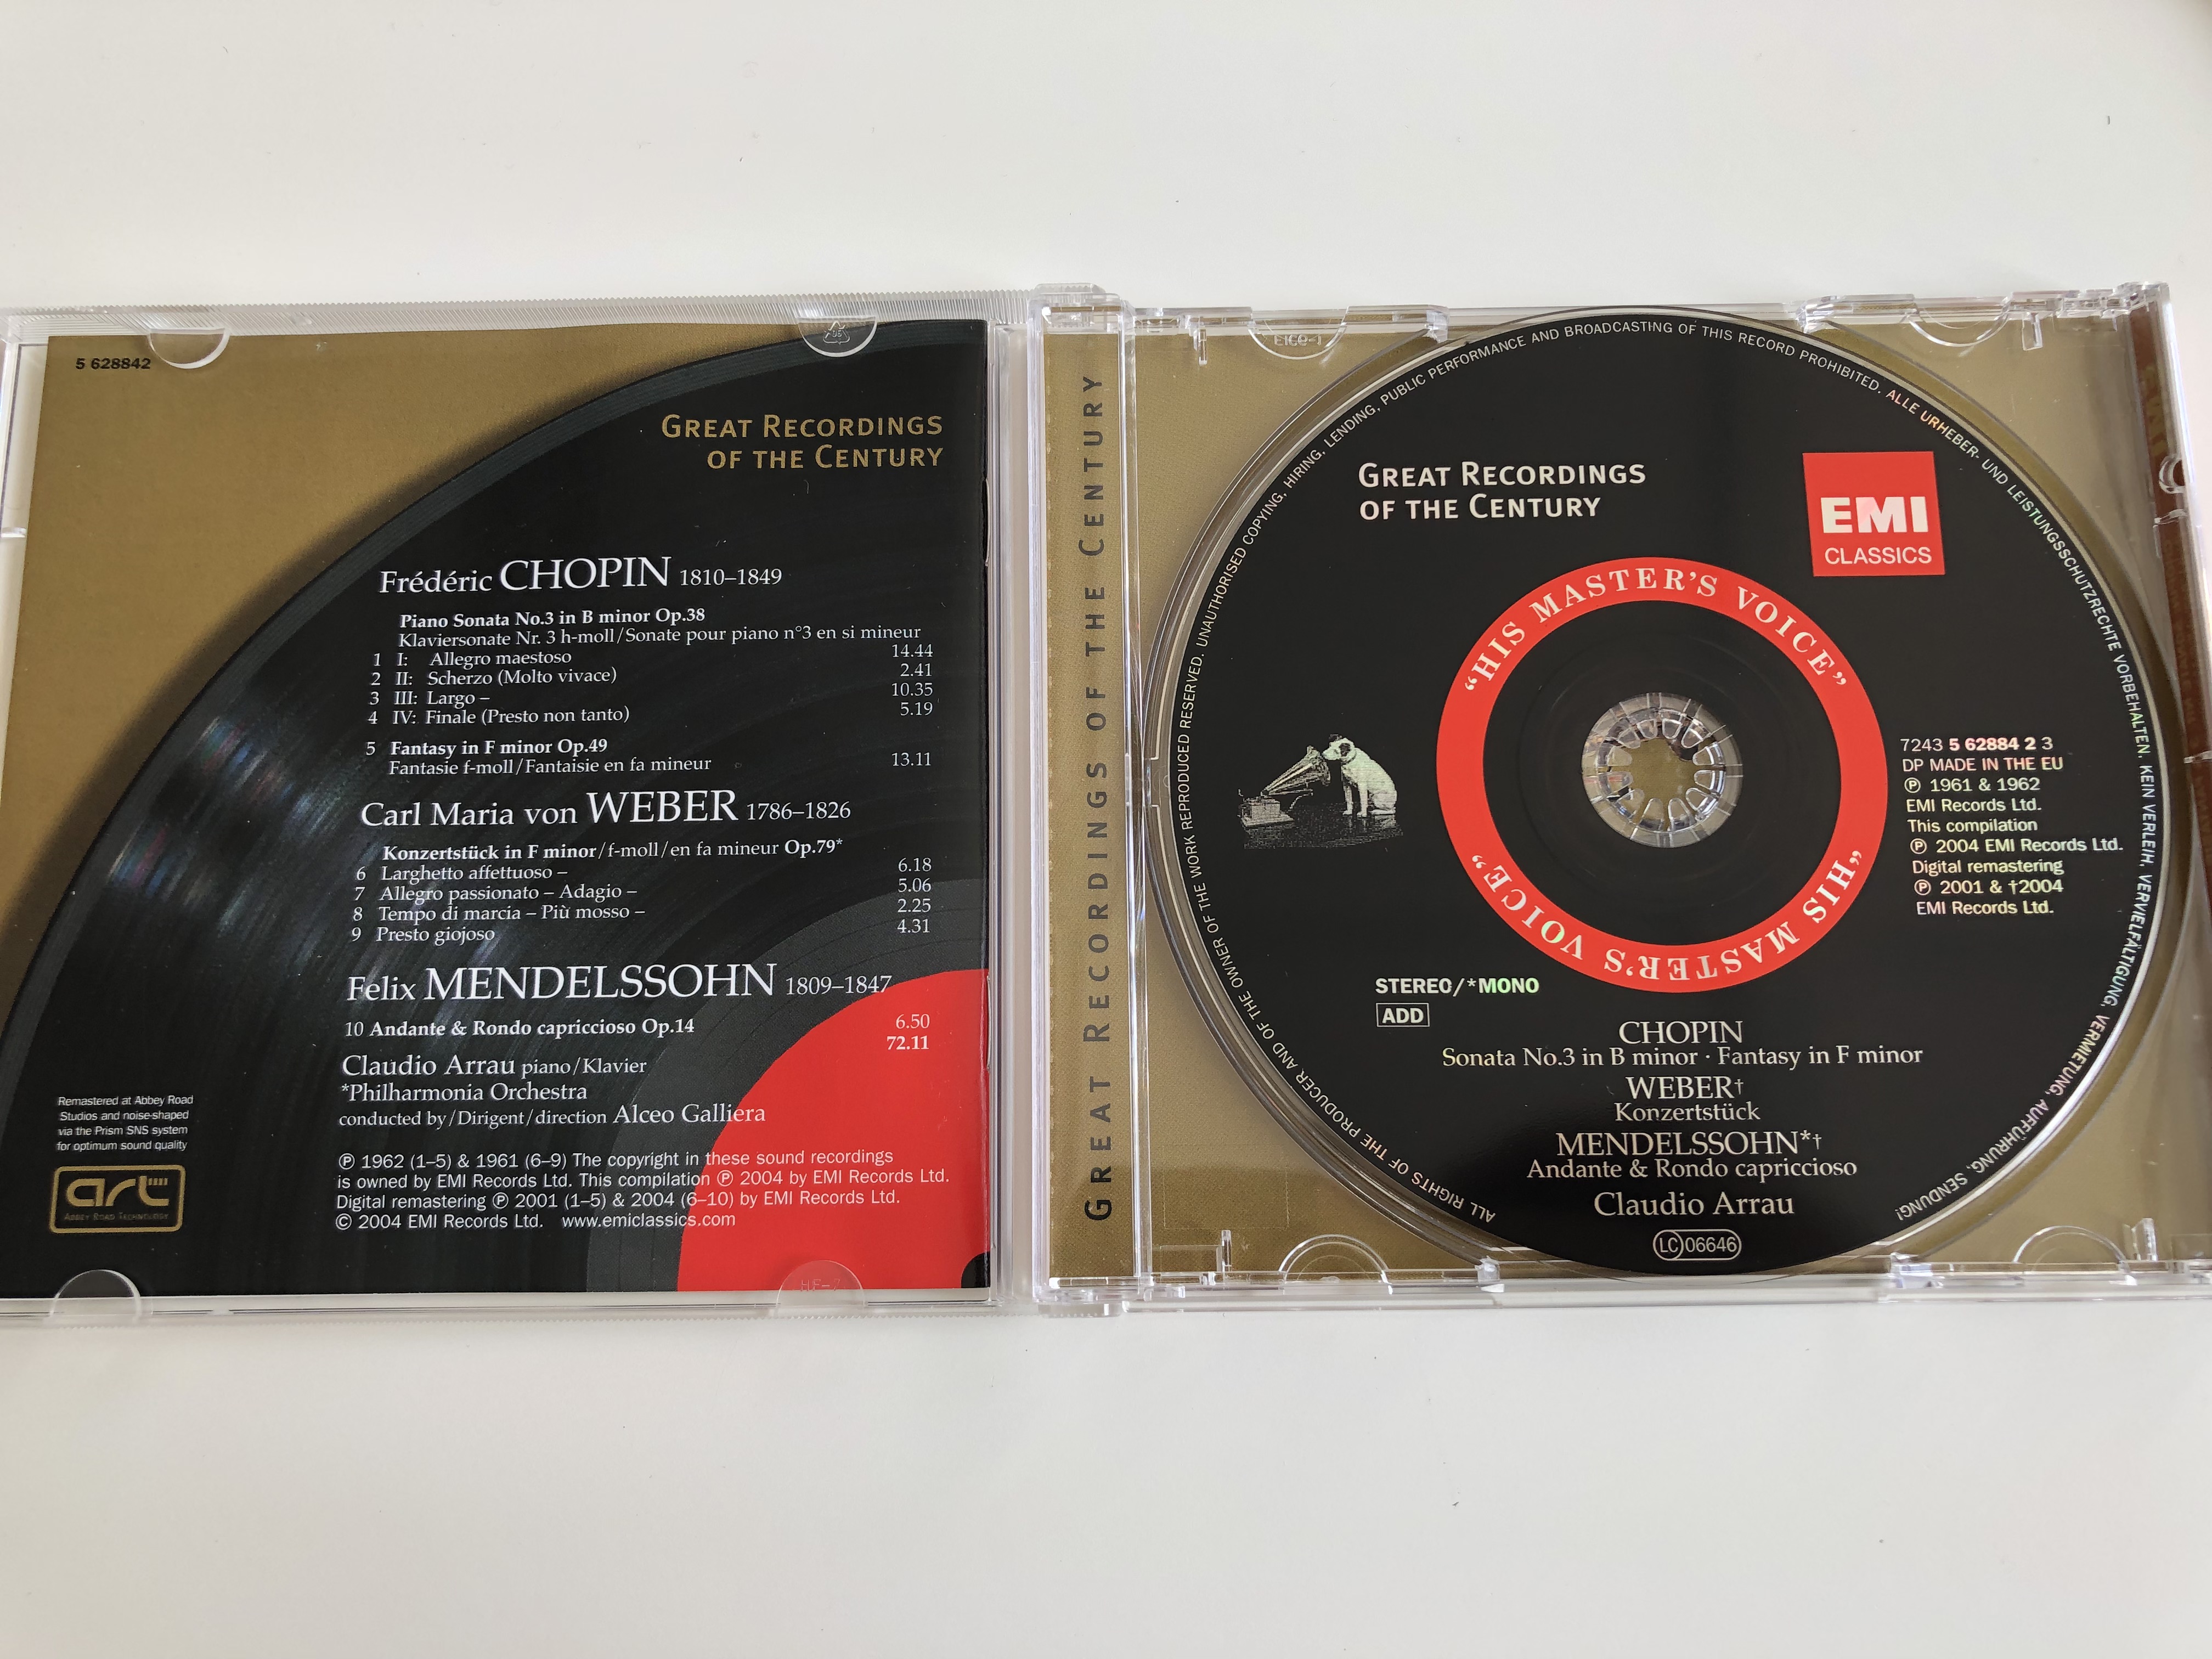 chopin-piano-sonata-no.-3-fantasy-weber-mendelssohn-claudio-arrau-emi-classics-audio-cd-2004-stereo-mono-724356288423-3-.jpg